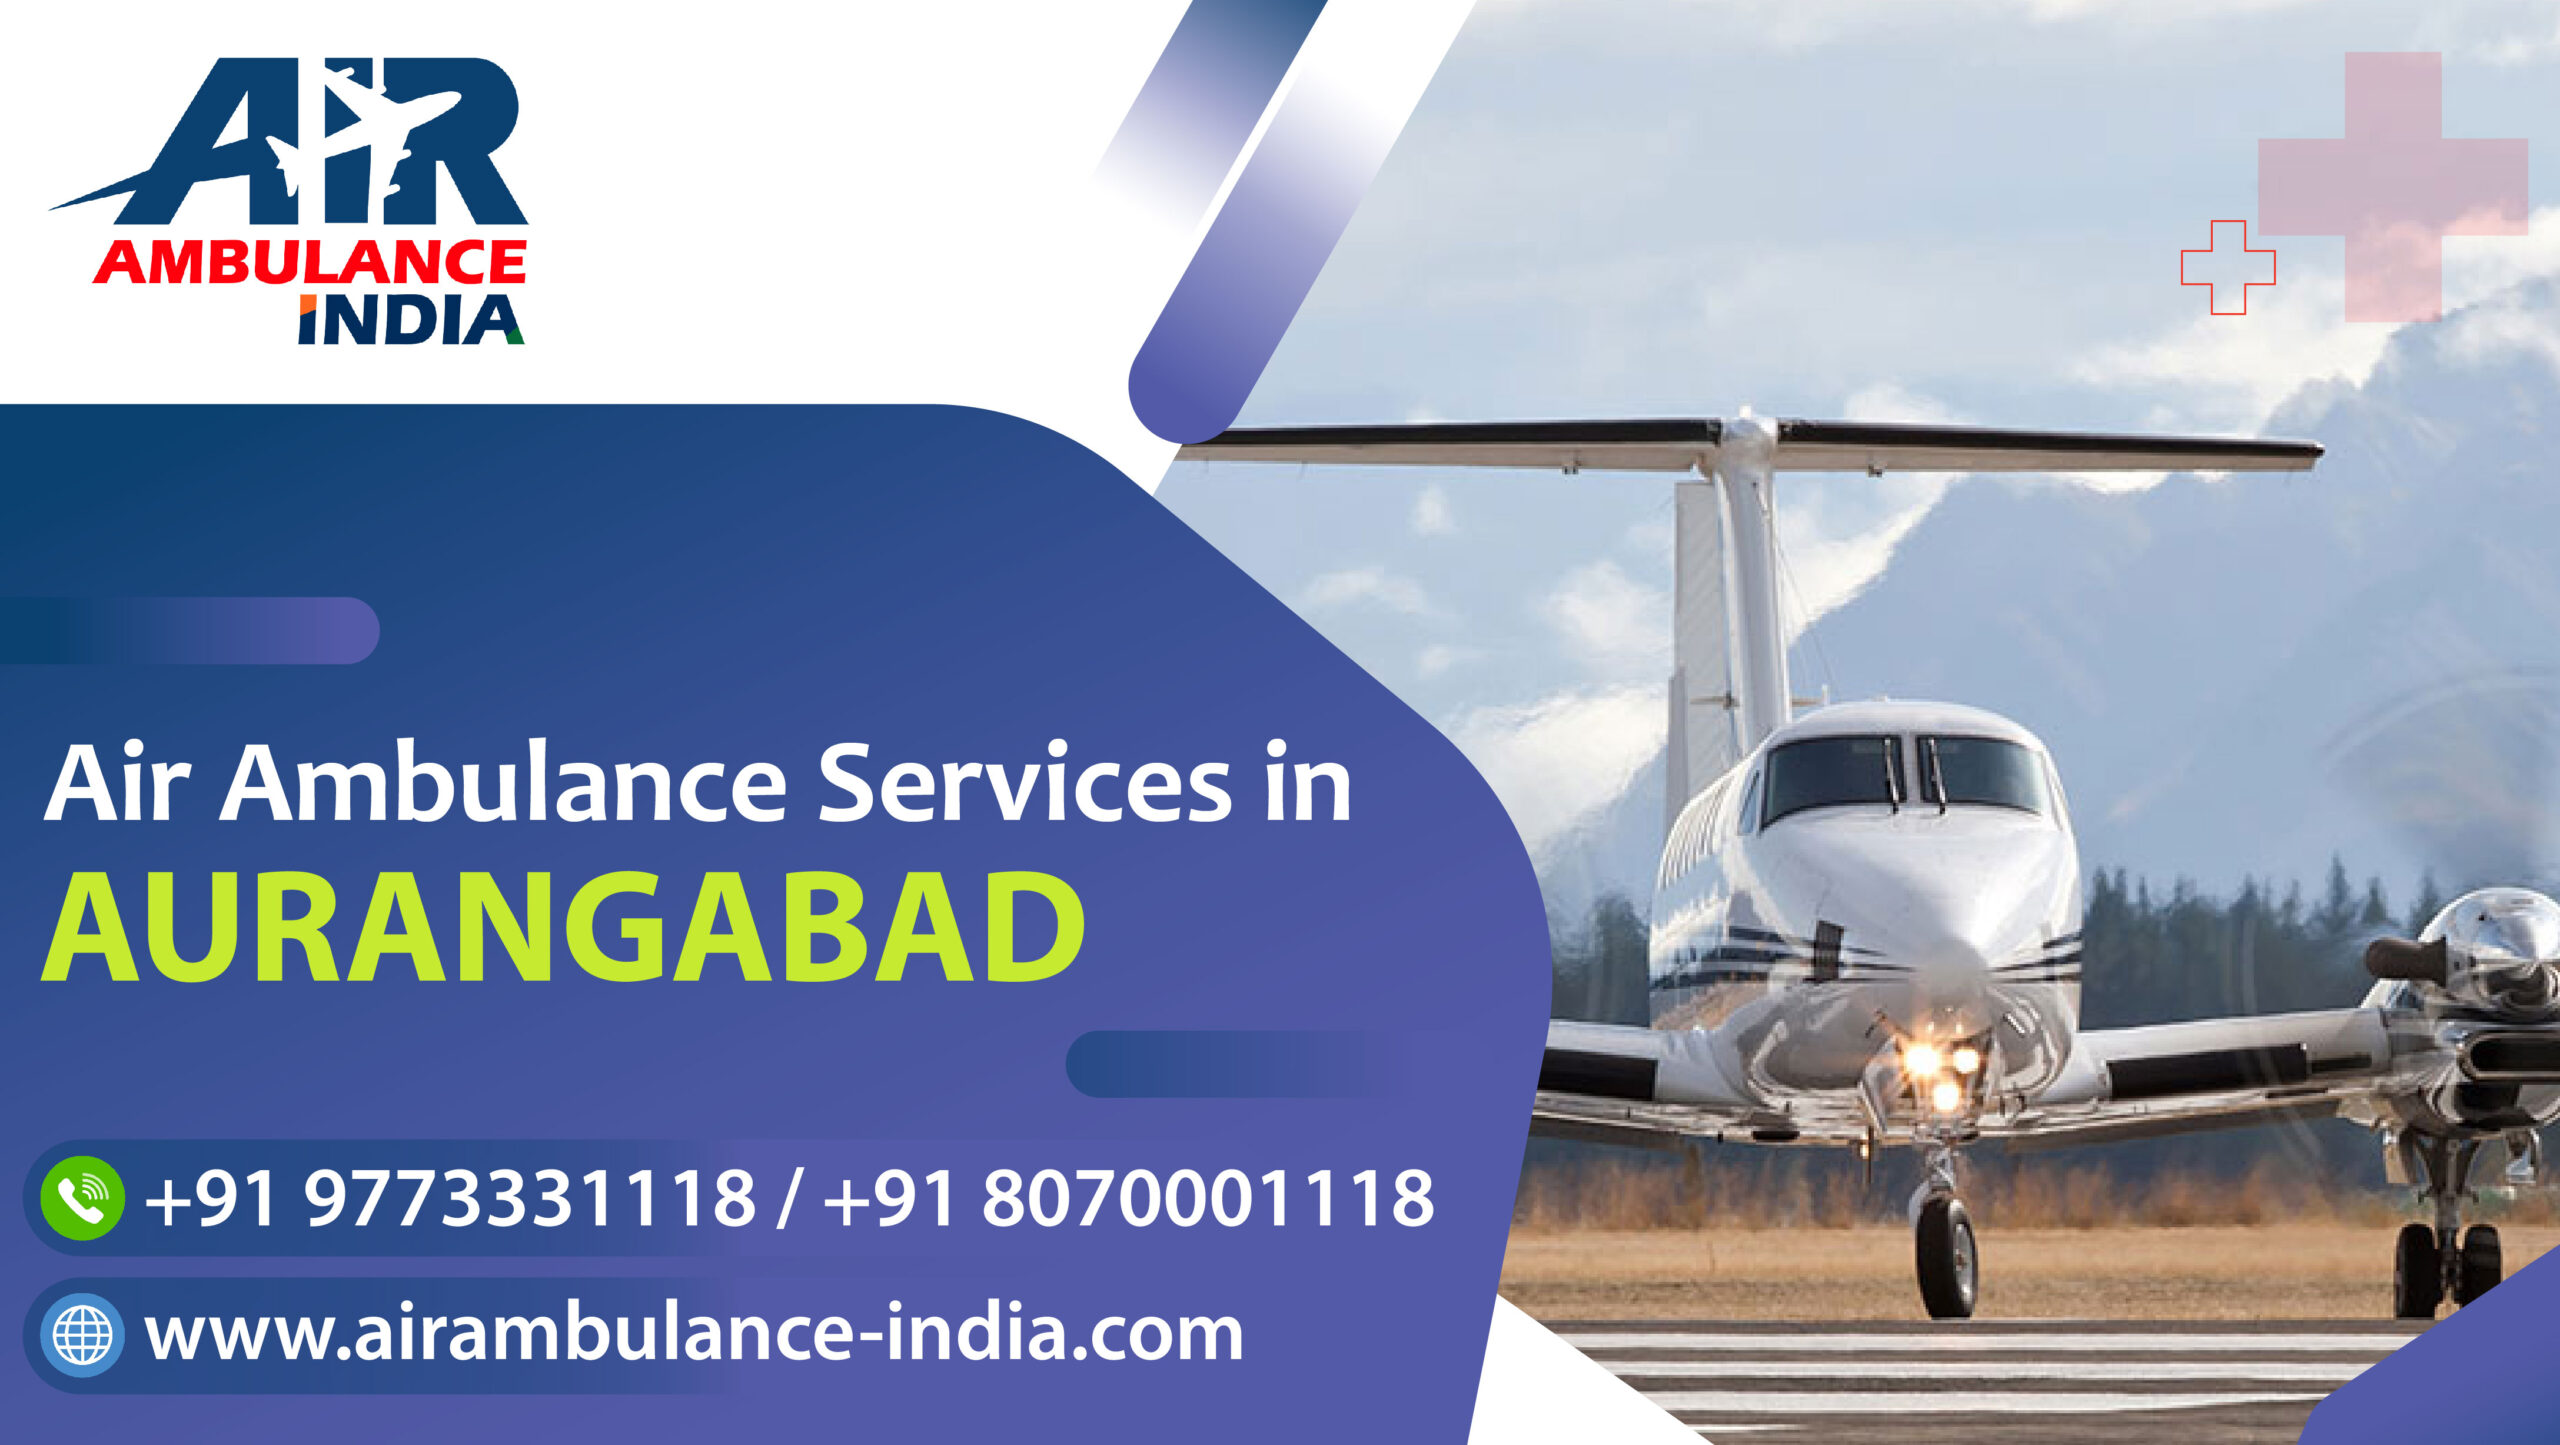 Air Ambulance Services in Aurangabad